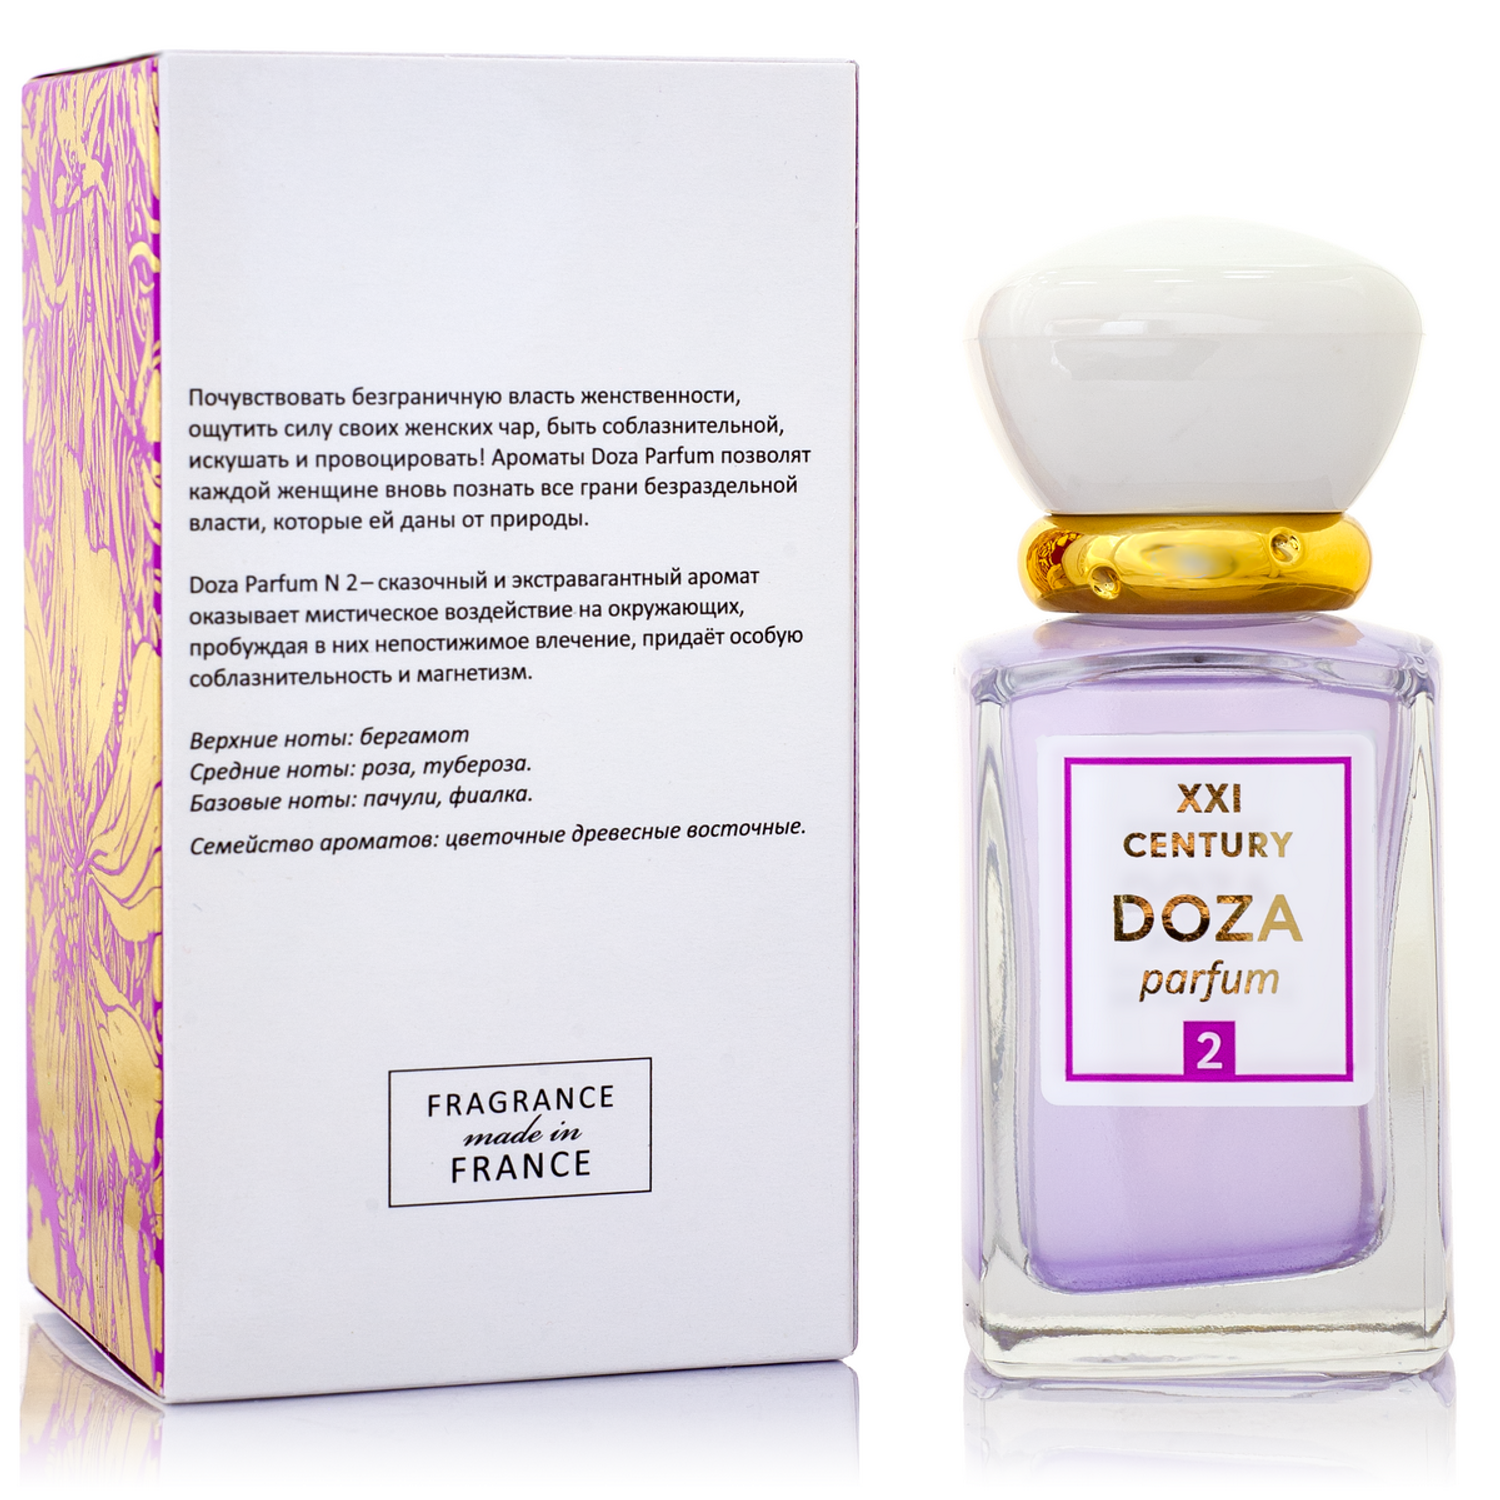 Духи XXI CENTURY DOZA parfum №2 50 мл - фото 3